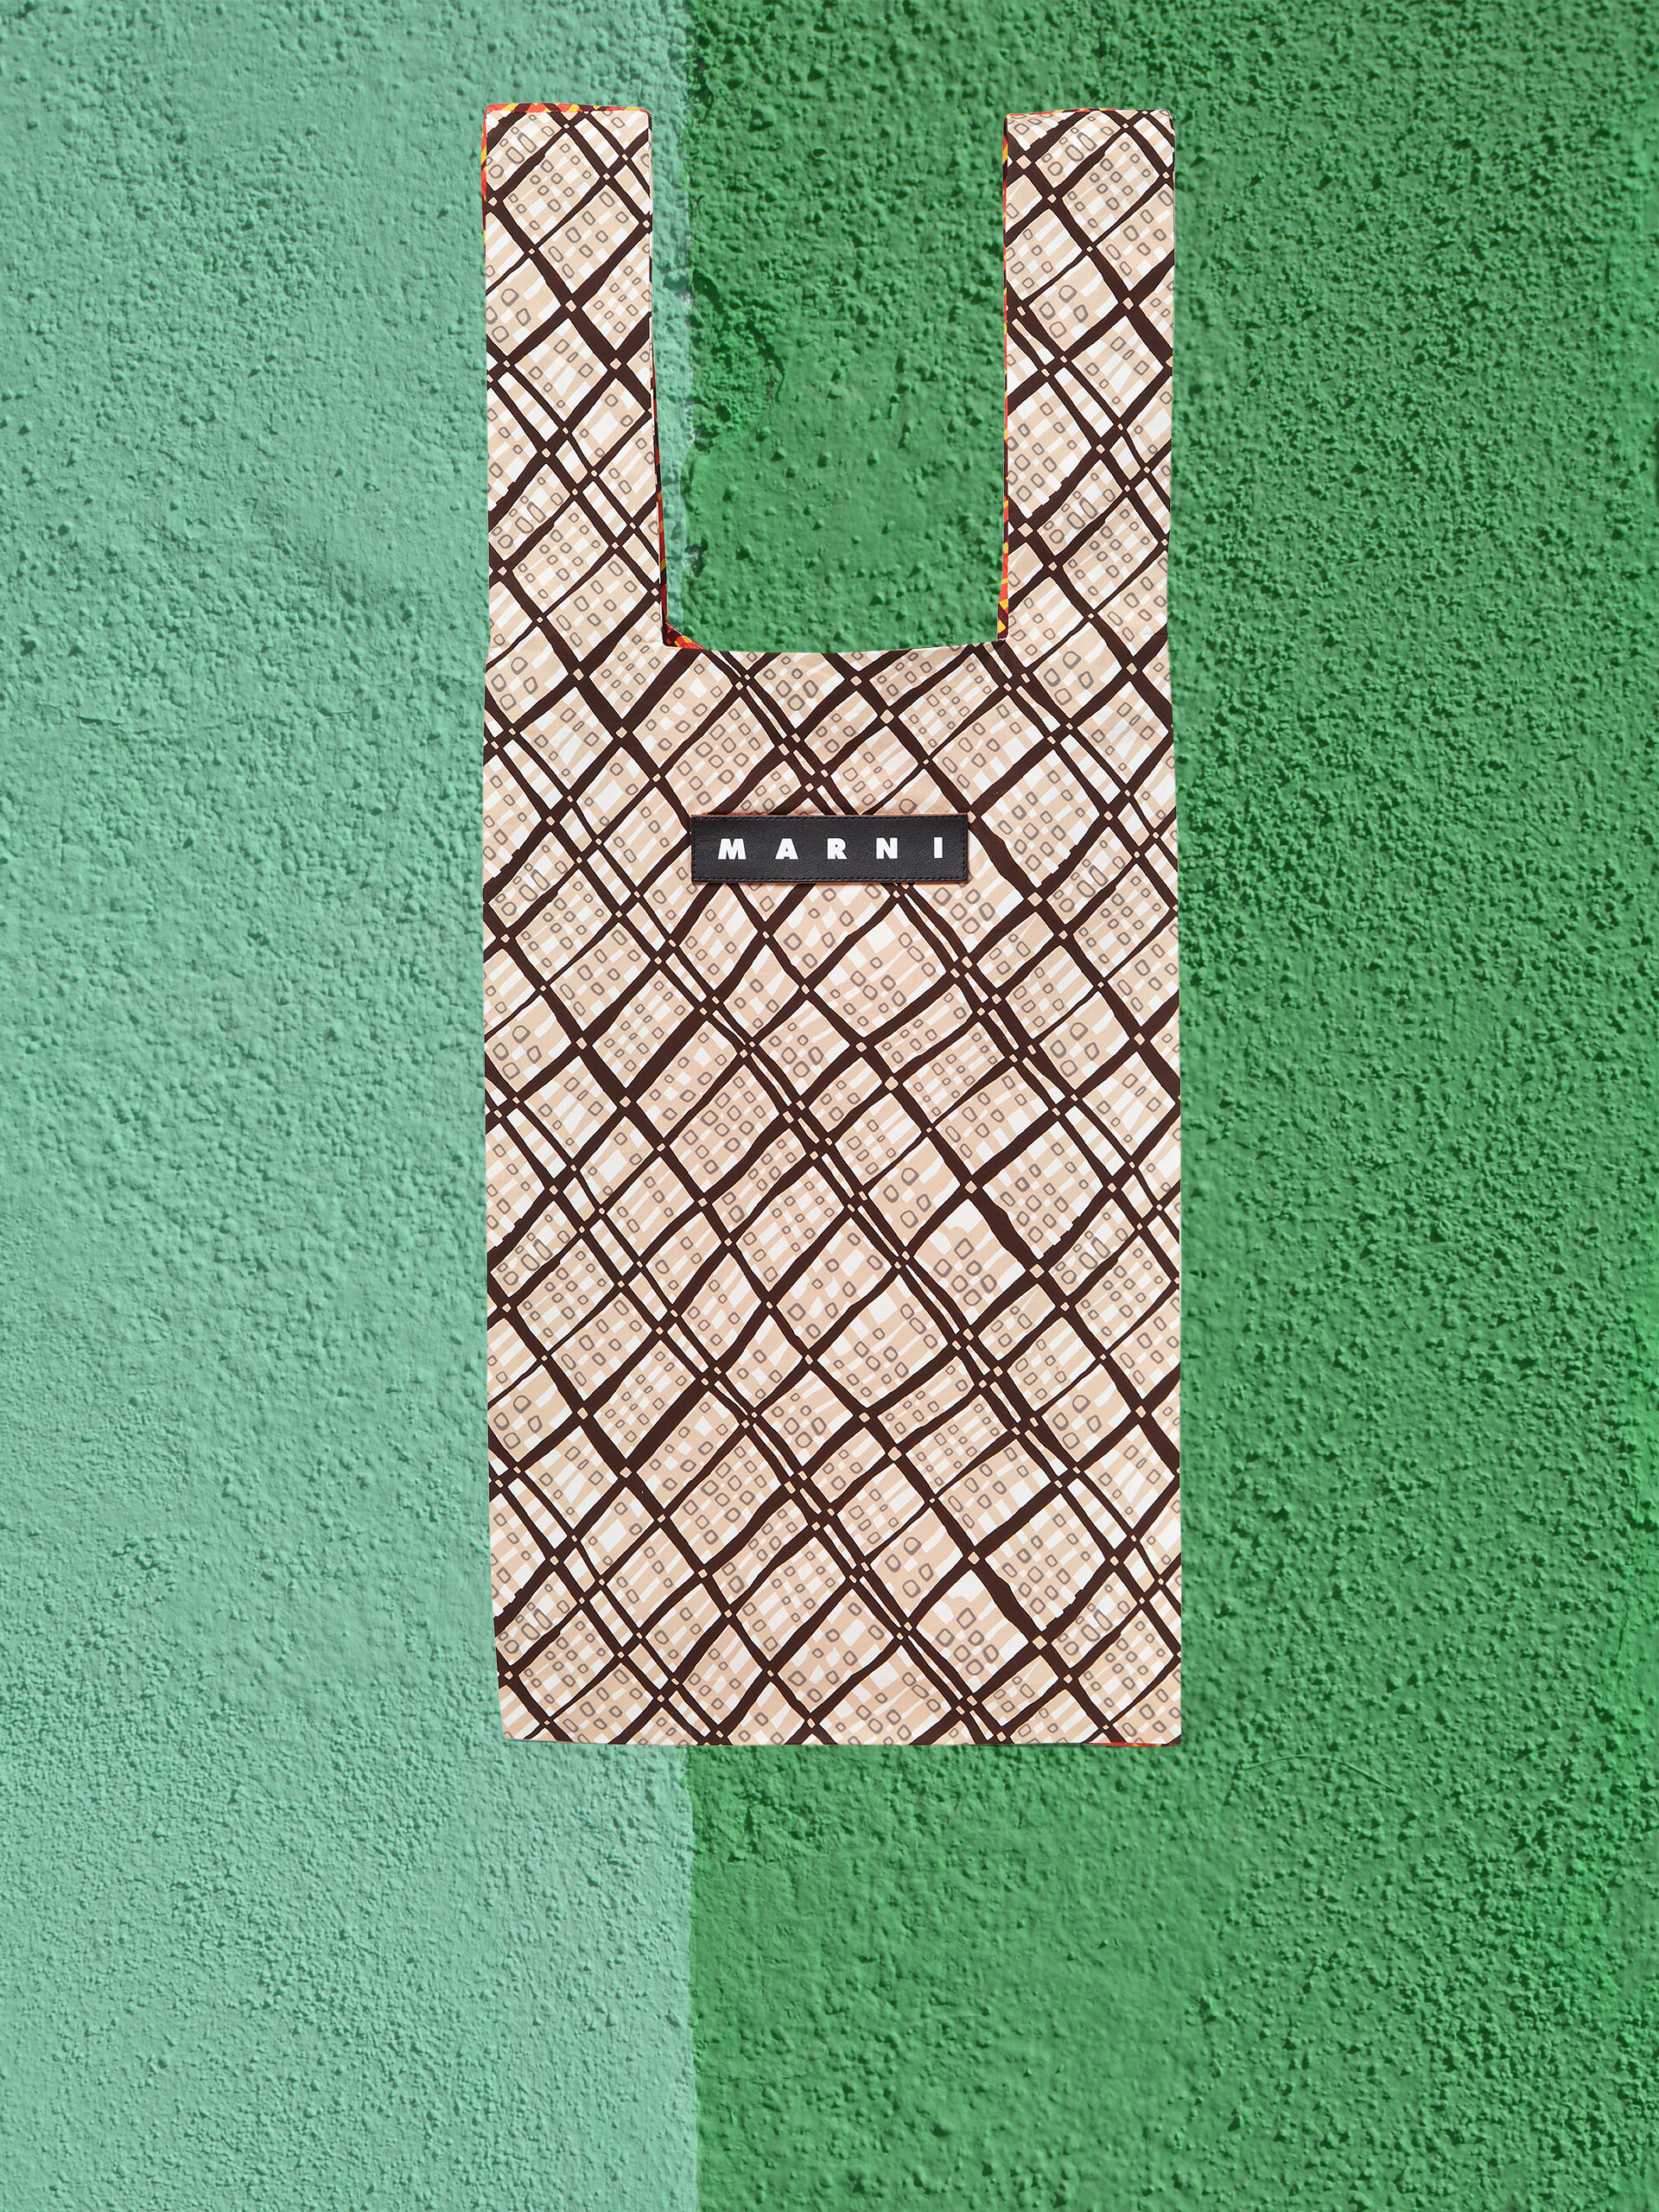 MARNI MARKET cotton shopping bag with vintage motif - Bags - Image 1